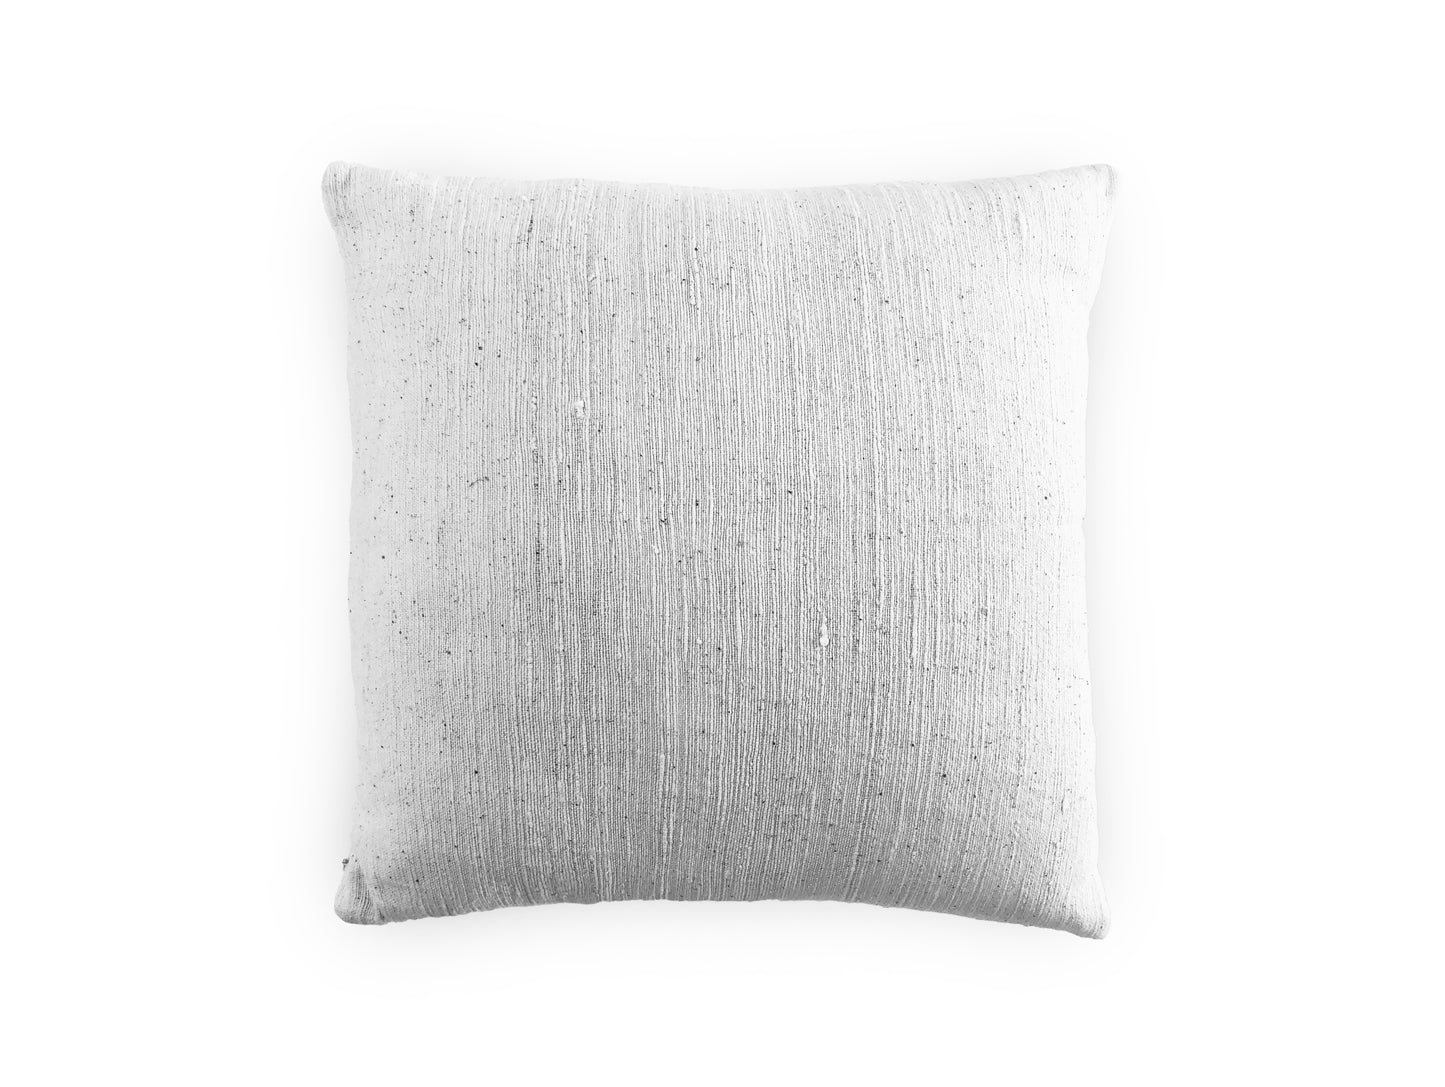 White Pillow 28x28 inches